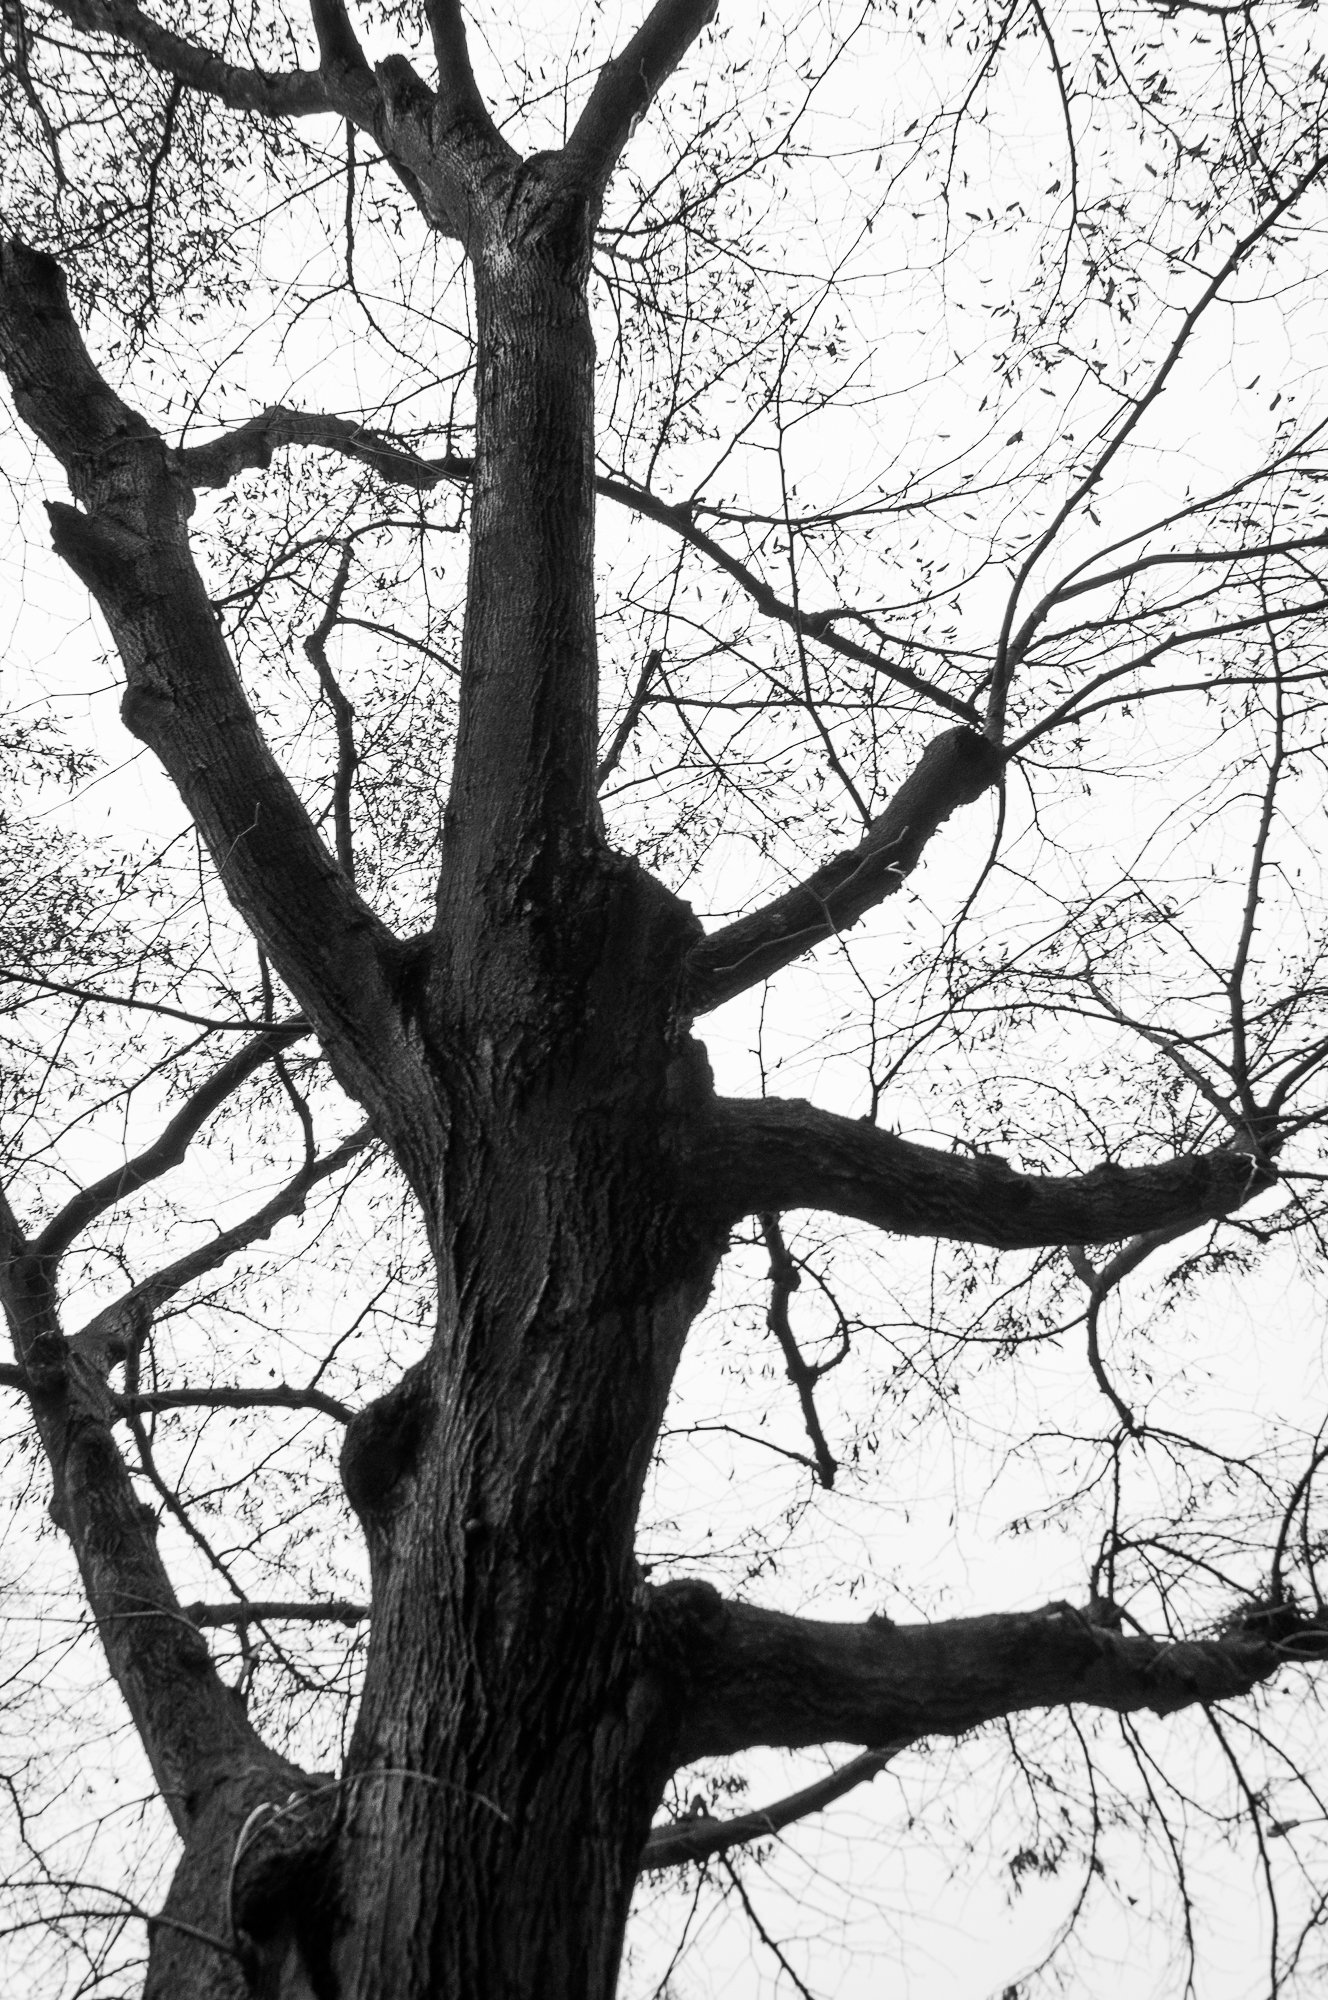 Adam Mazek Photography Warsaw 2020. Post: "The perfection of eternity." Minimalism. Tree.